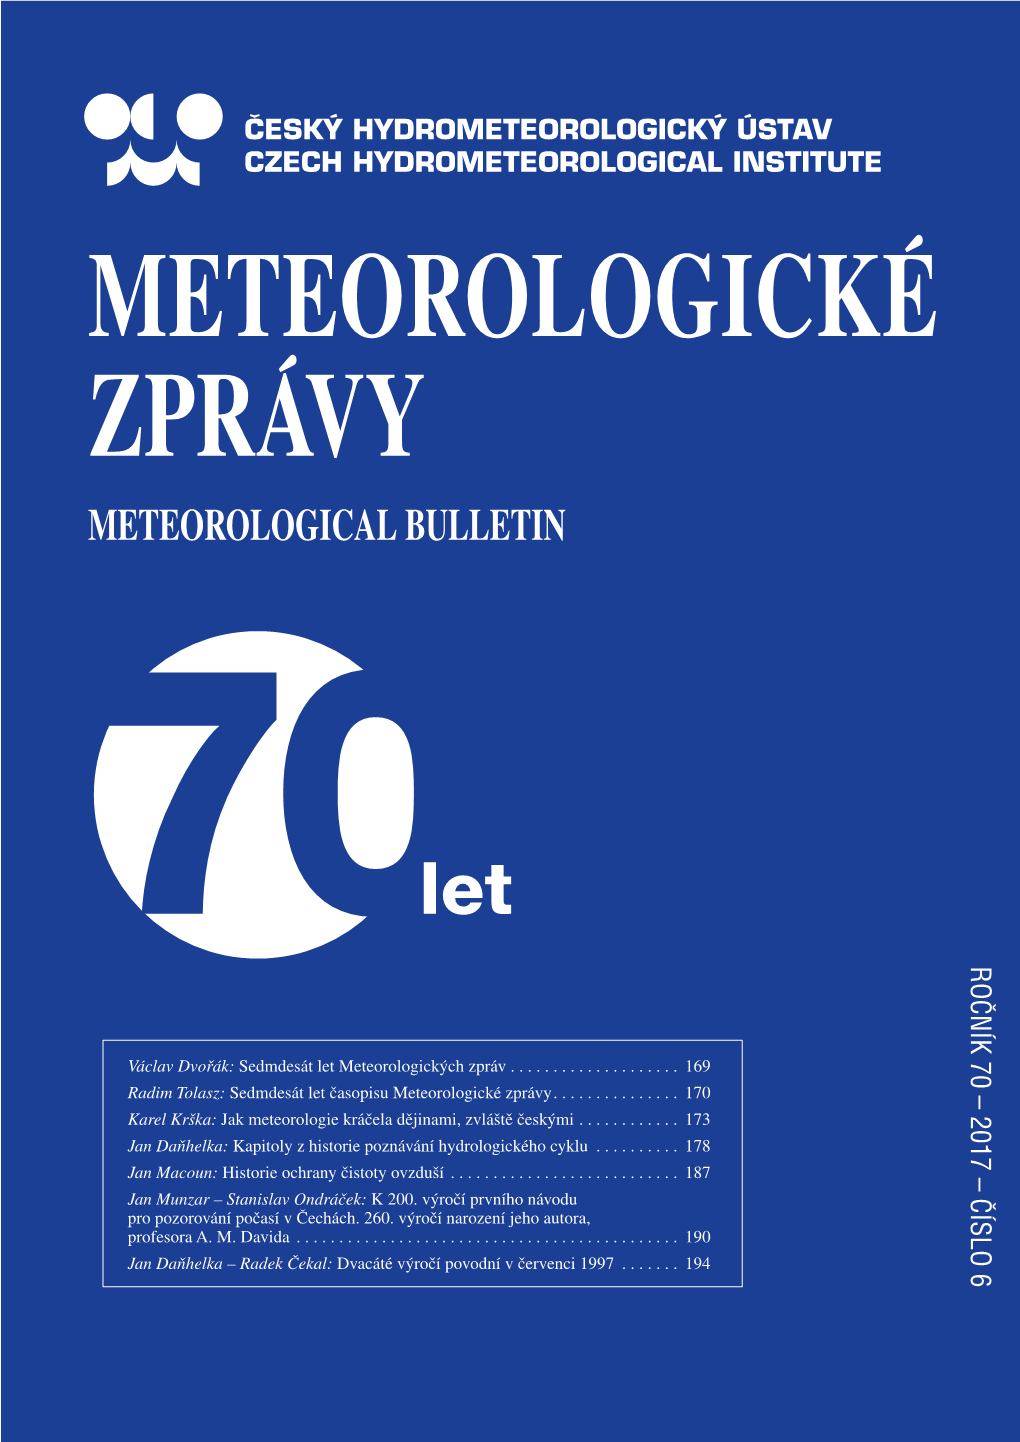 Meteorological Bulletin